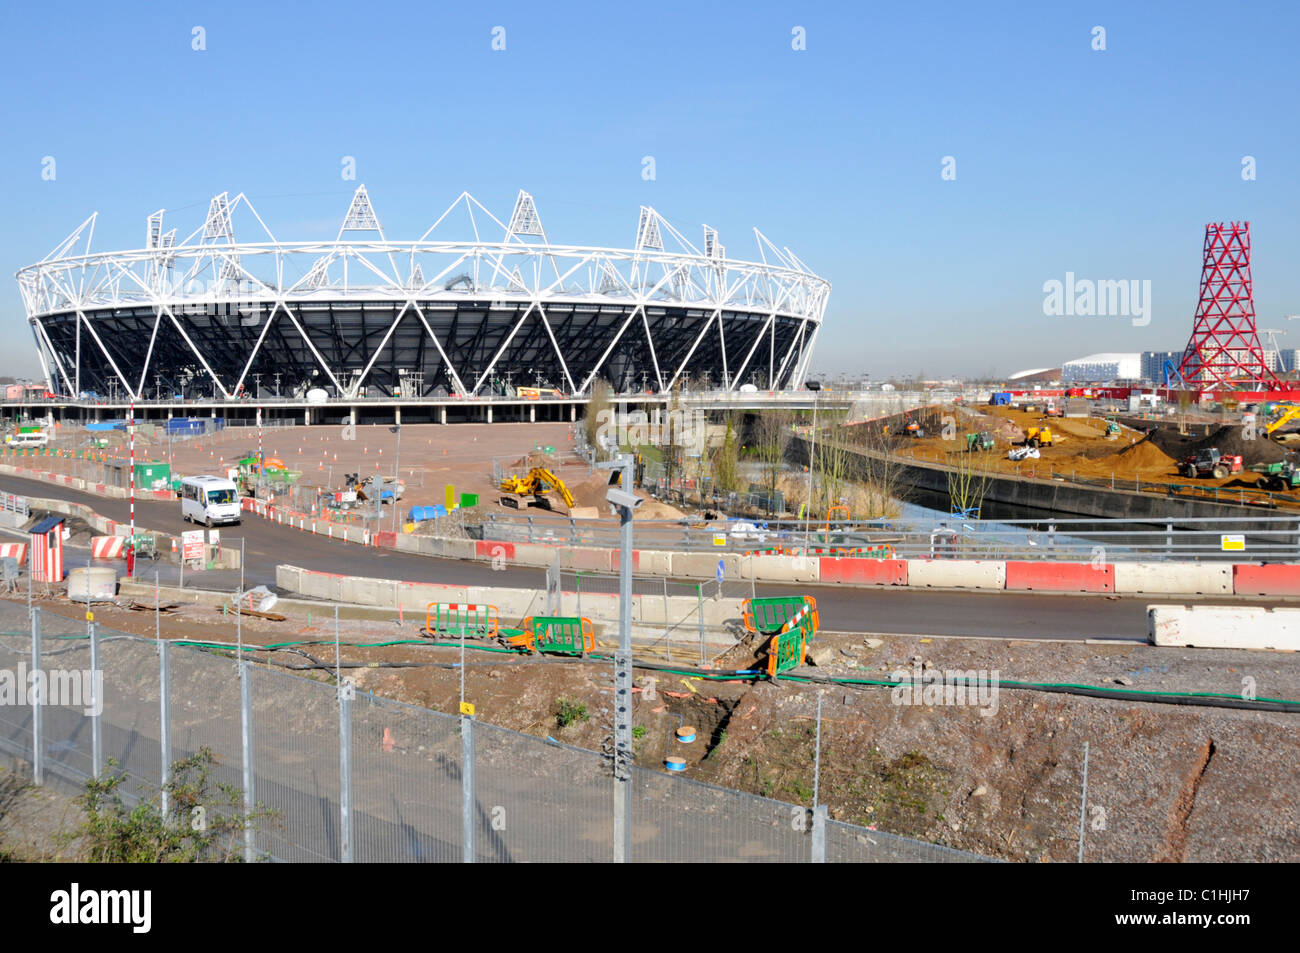 Building construction site work in progress 2012 Olympic & Paralympic Games stadium & Anish Kapoor Orbit sculpture tower London Stratford England UK Stock Photo